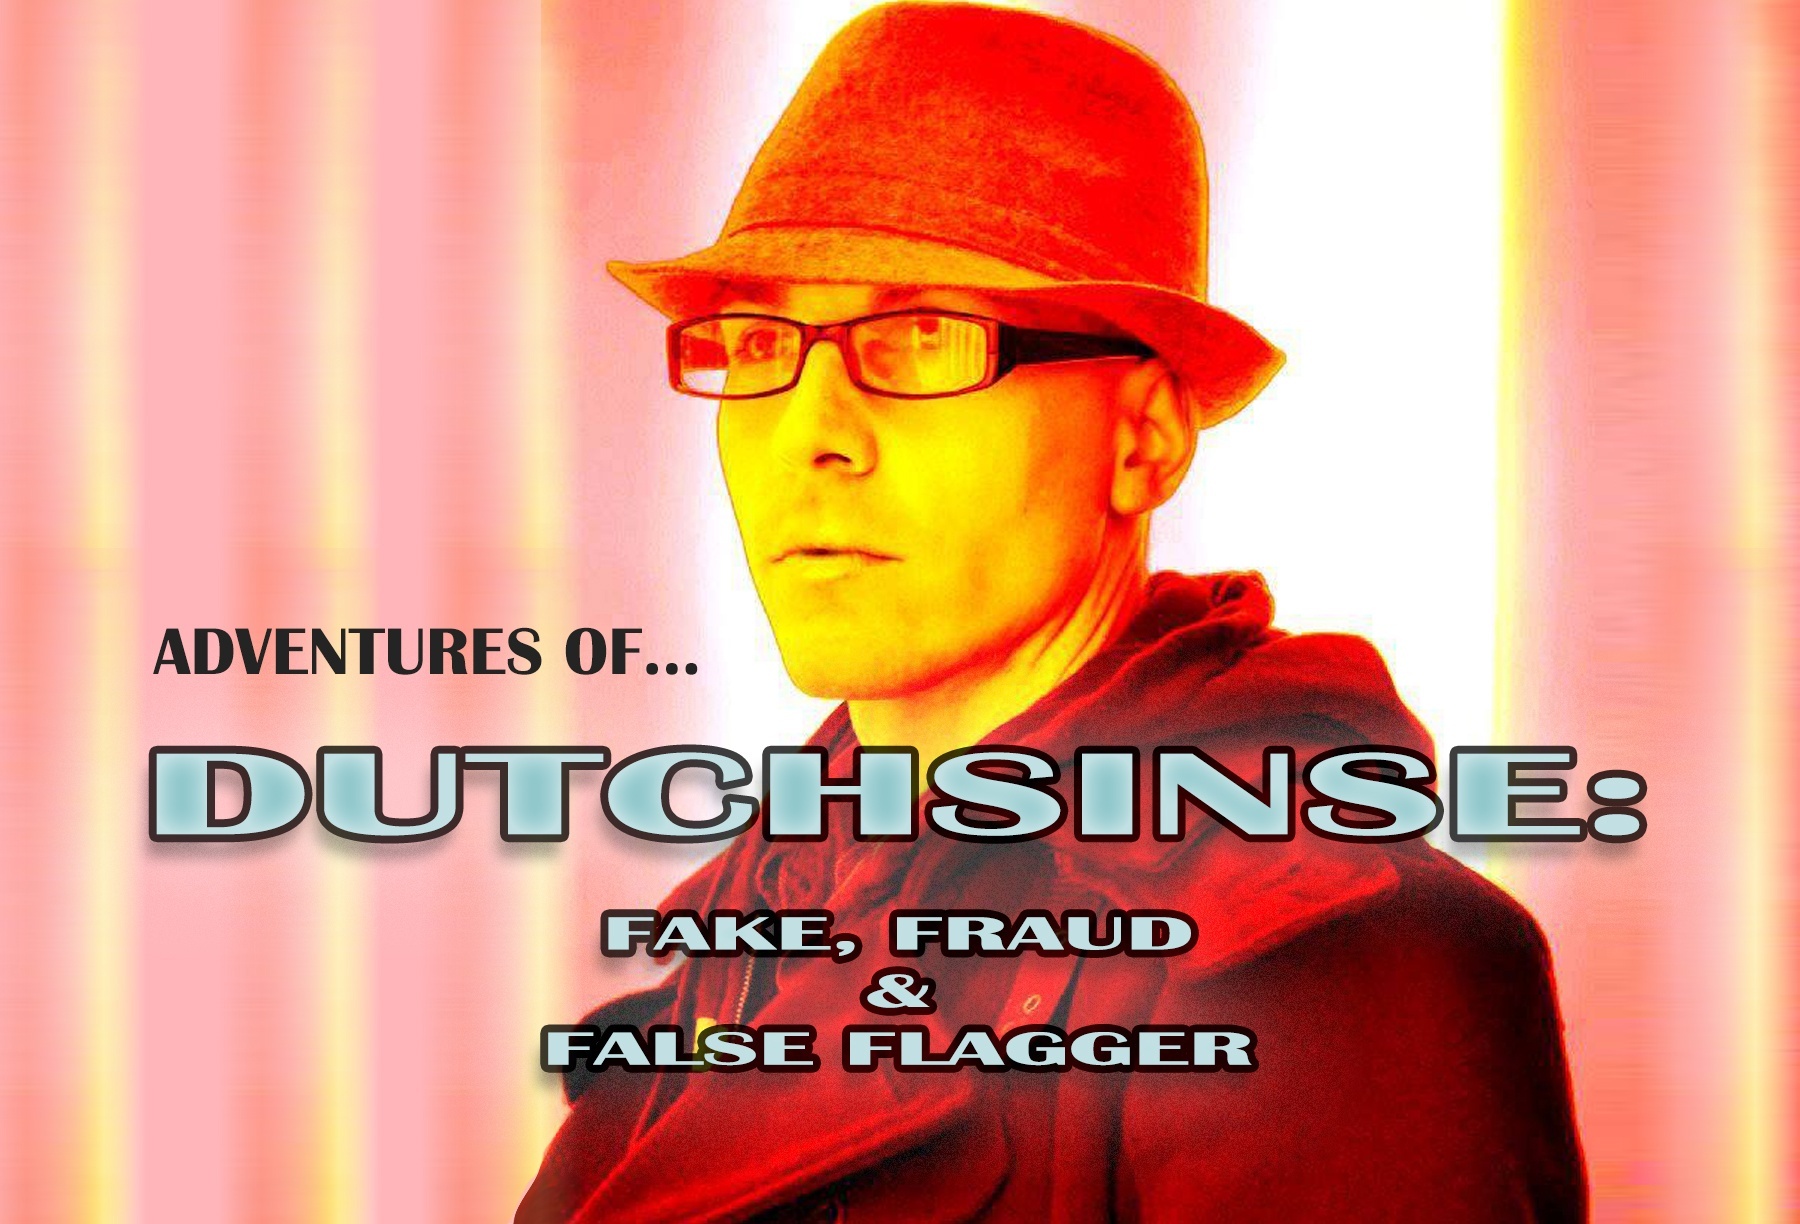 Michael Yury Janitch is the fake, fraud false flagger Dutchsinse!